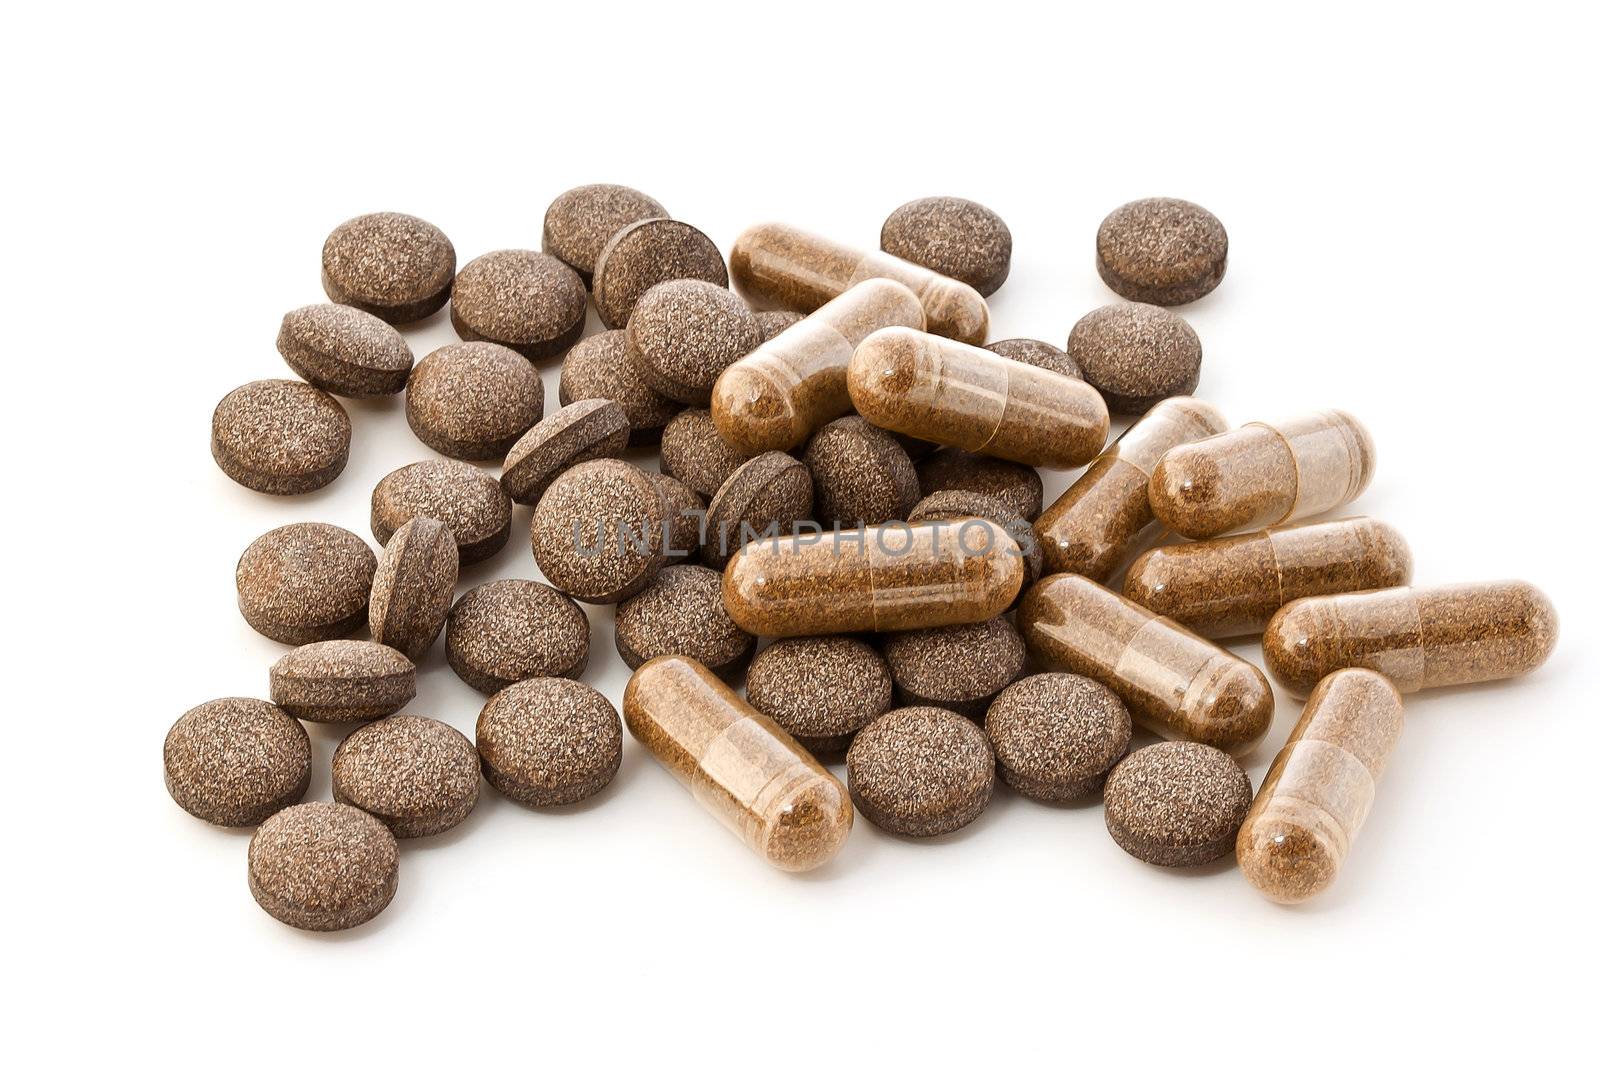 Close up image of herbal medicines